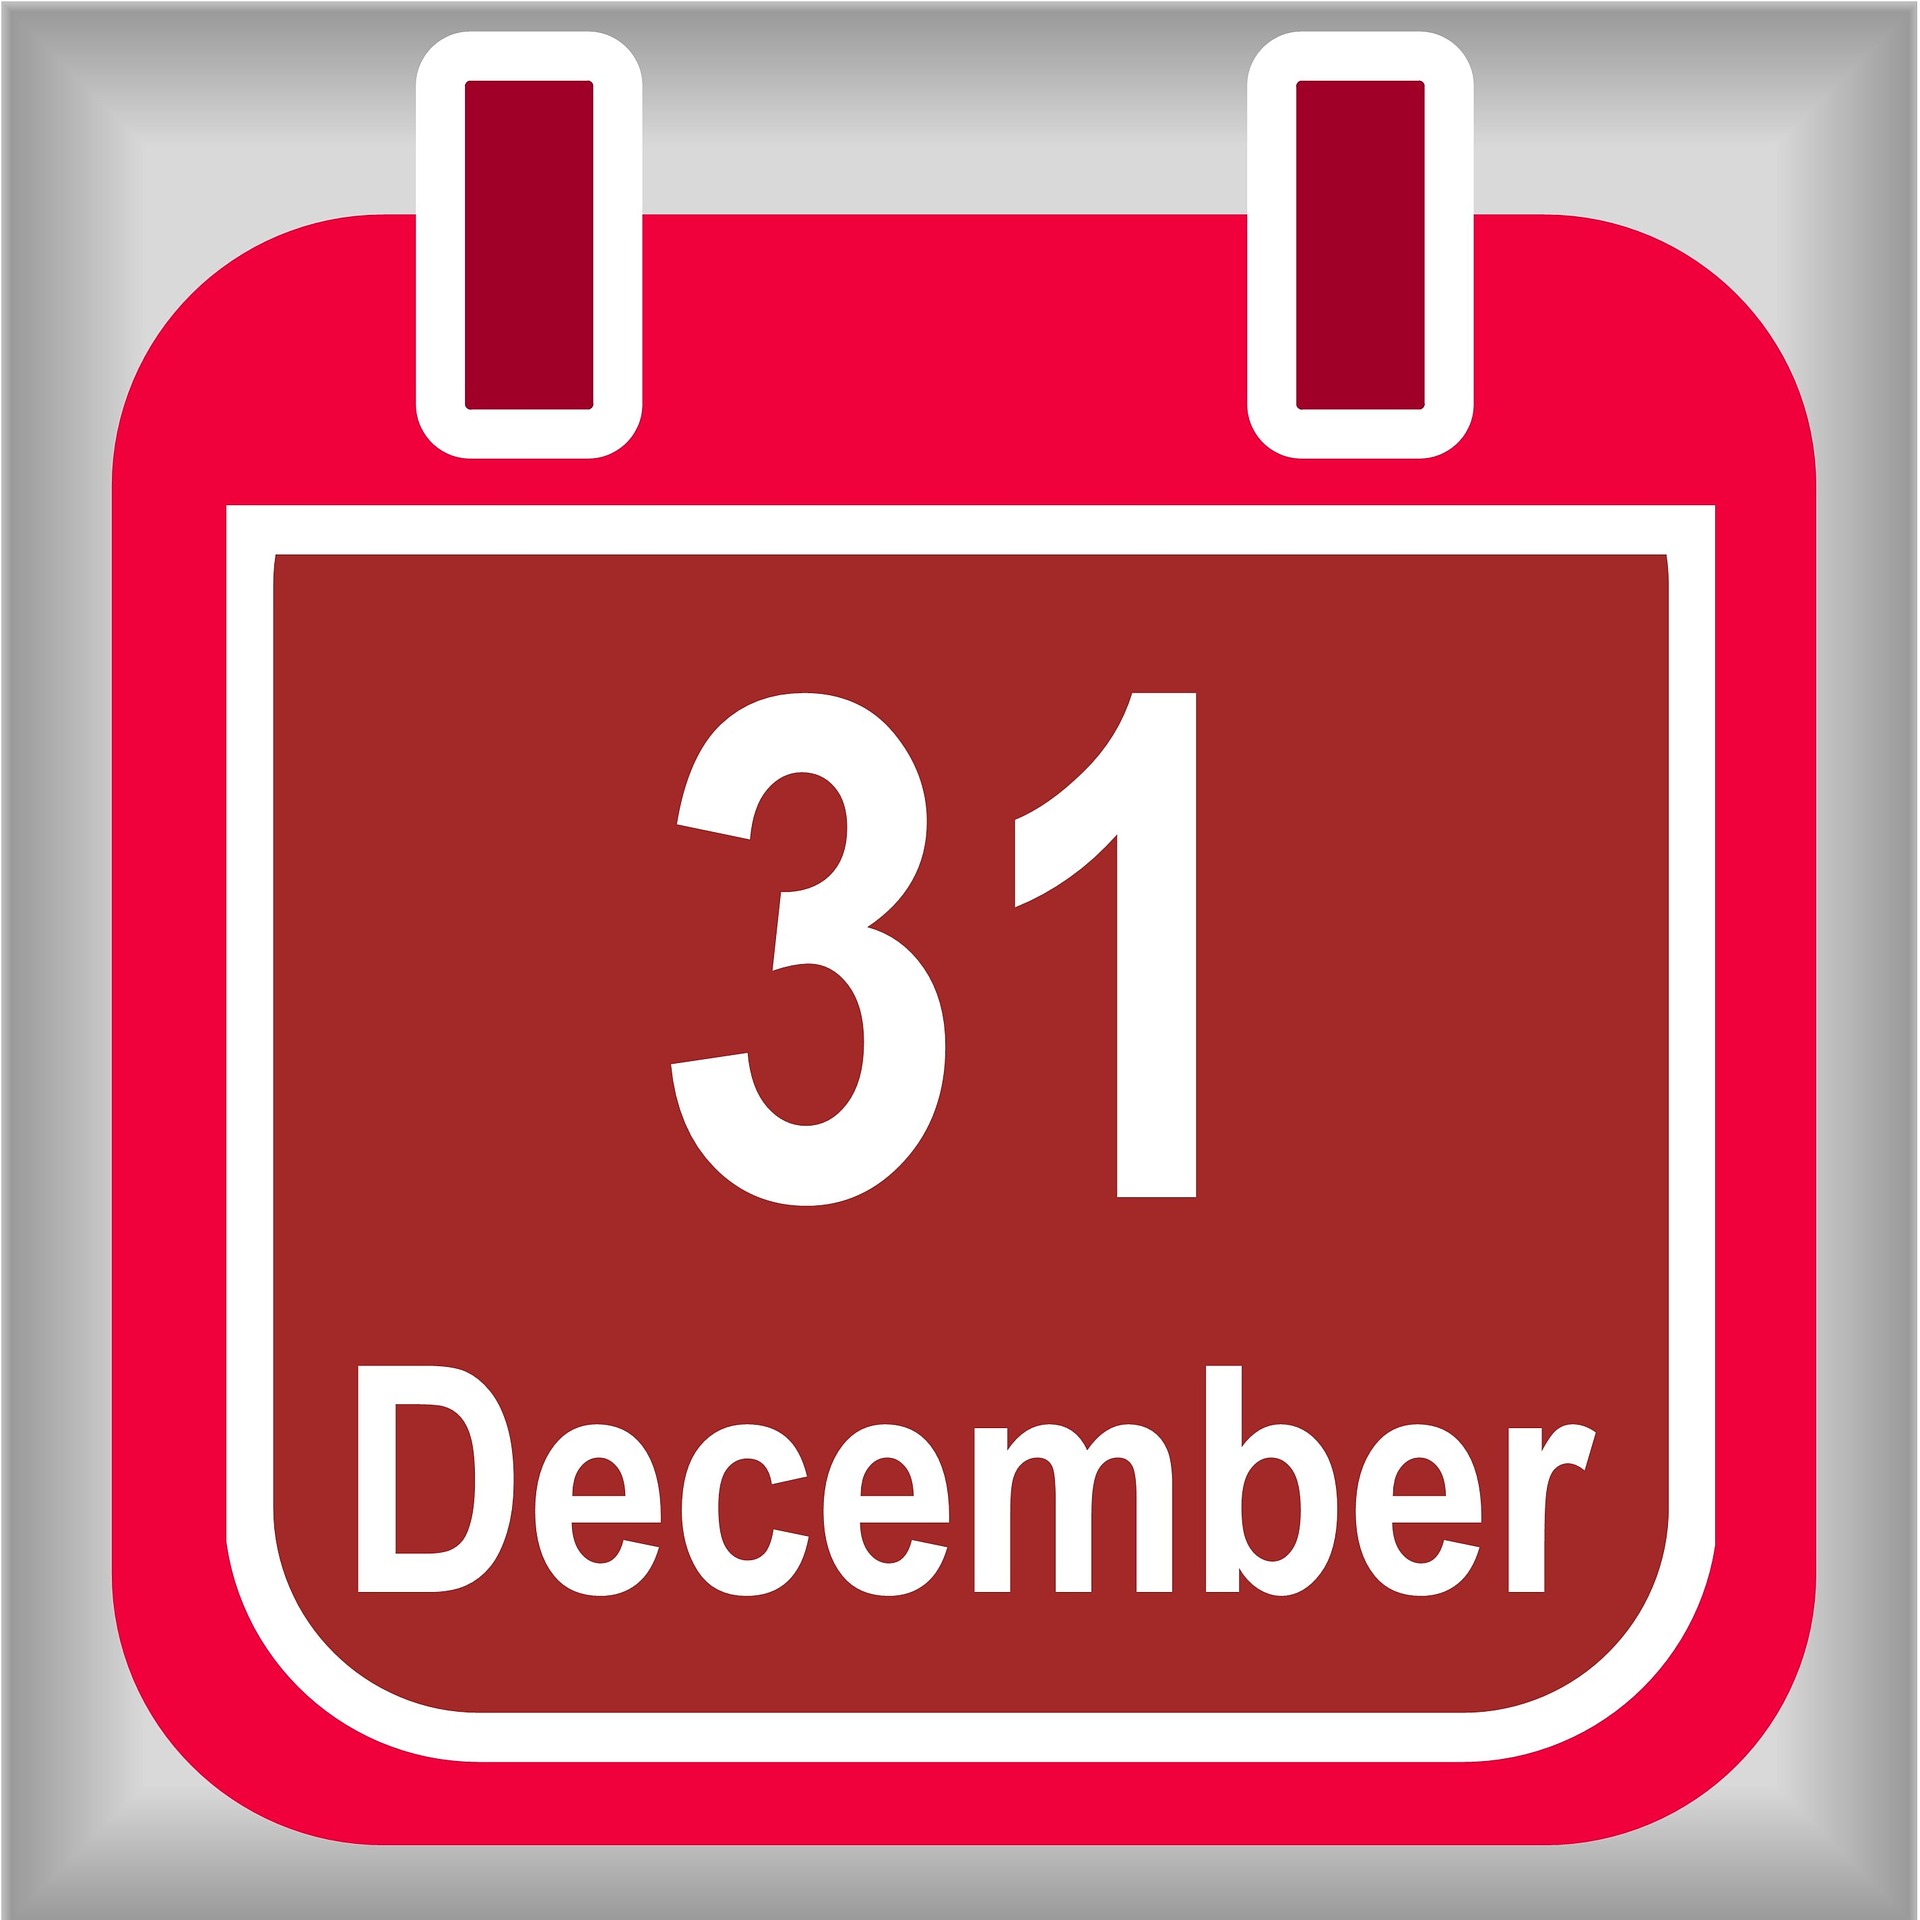 31 декабря 18. 25 Декабря календарь. Календарь 31 декабря. Календарь 25 December. Календарь 31 декабря фон.